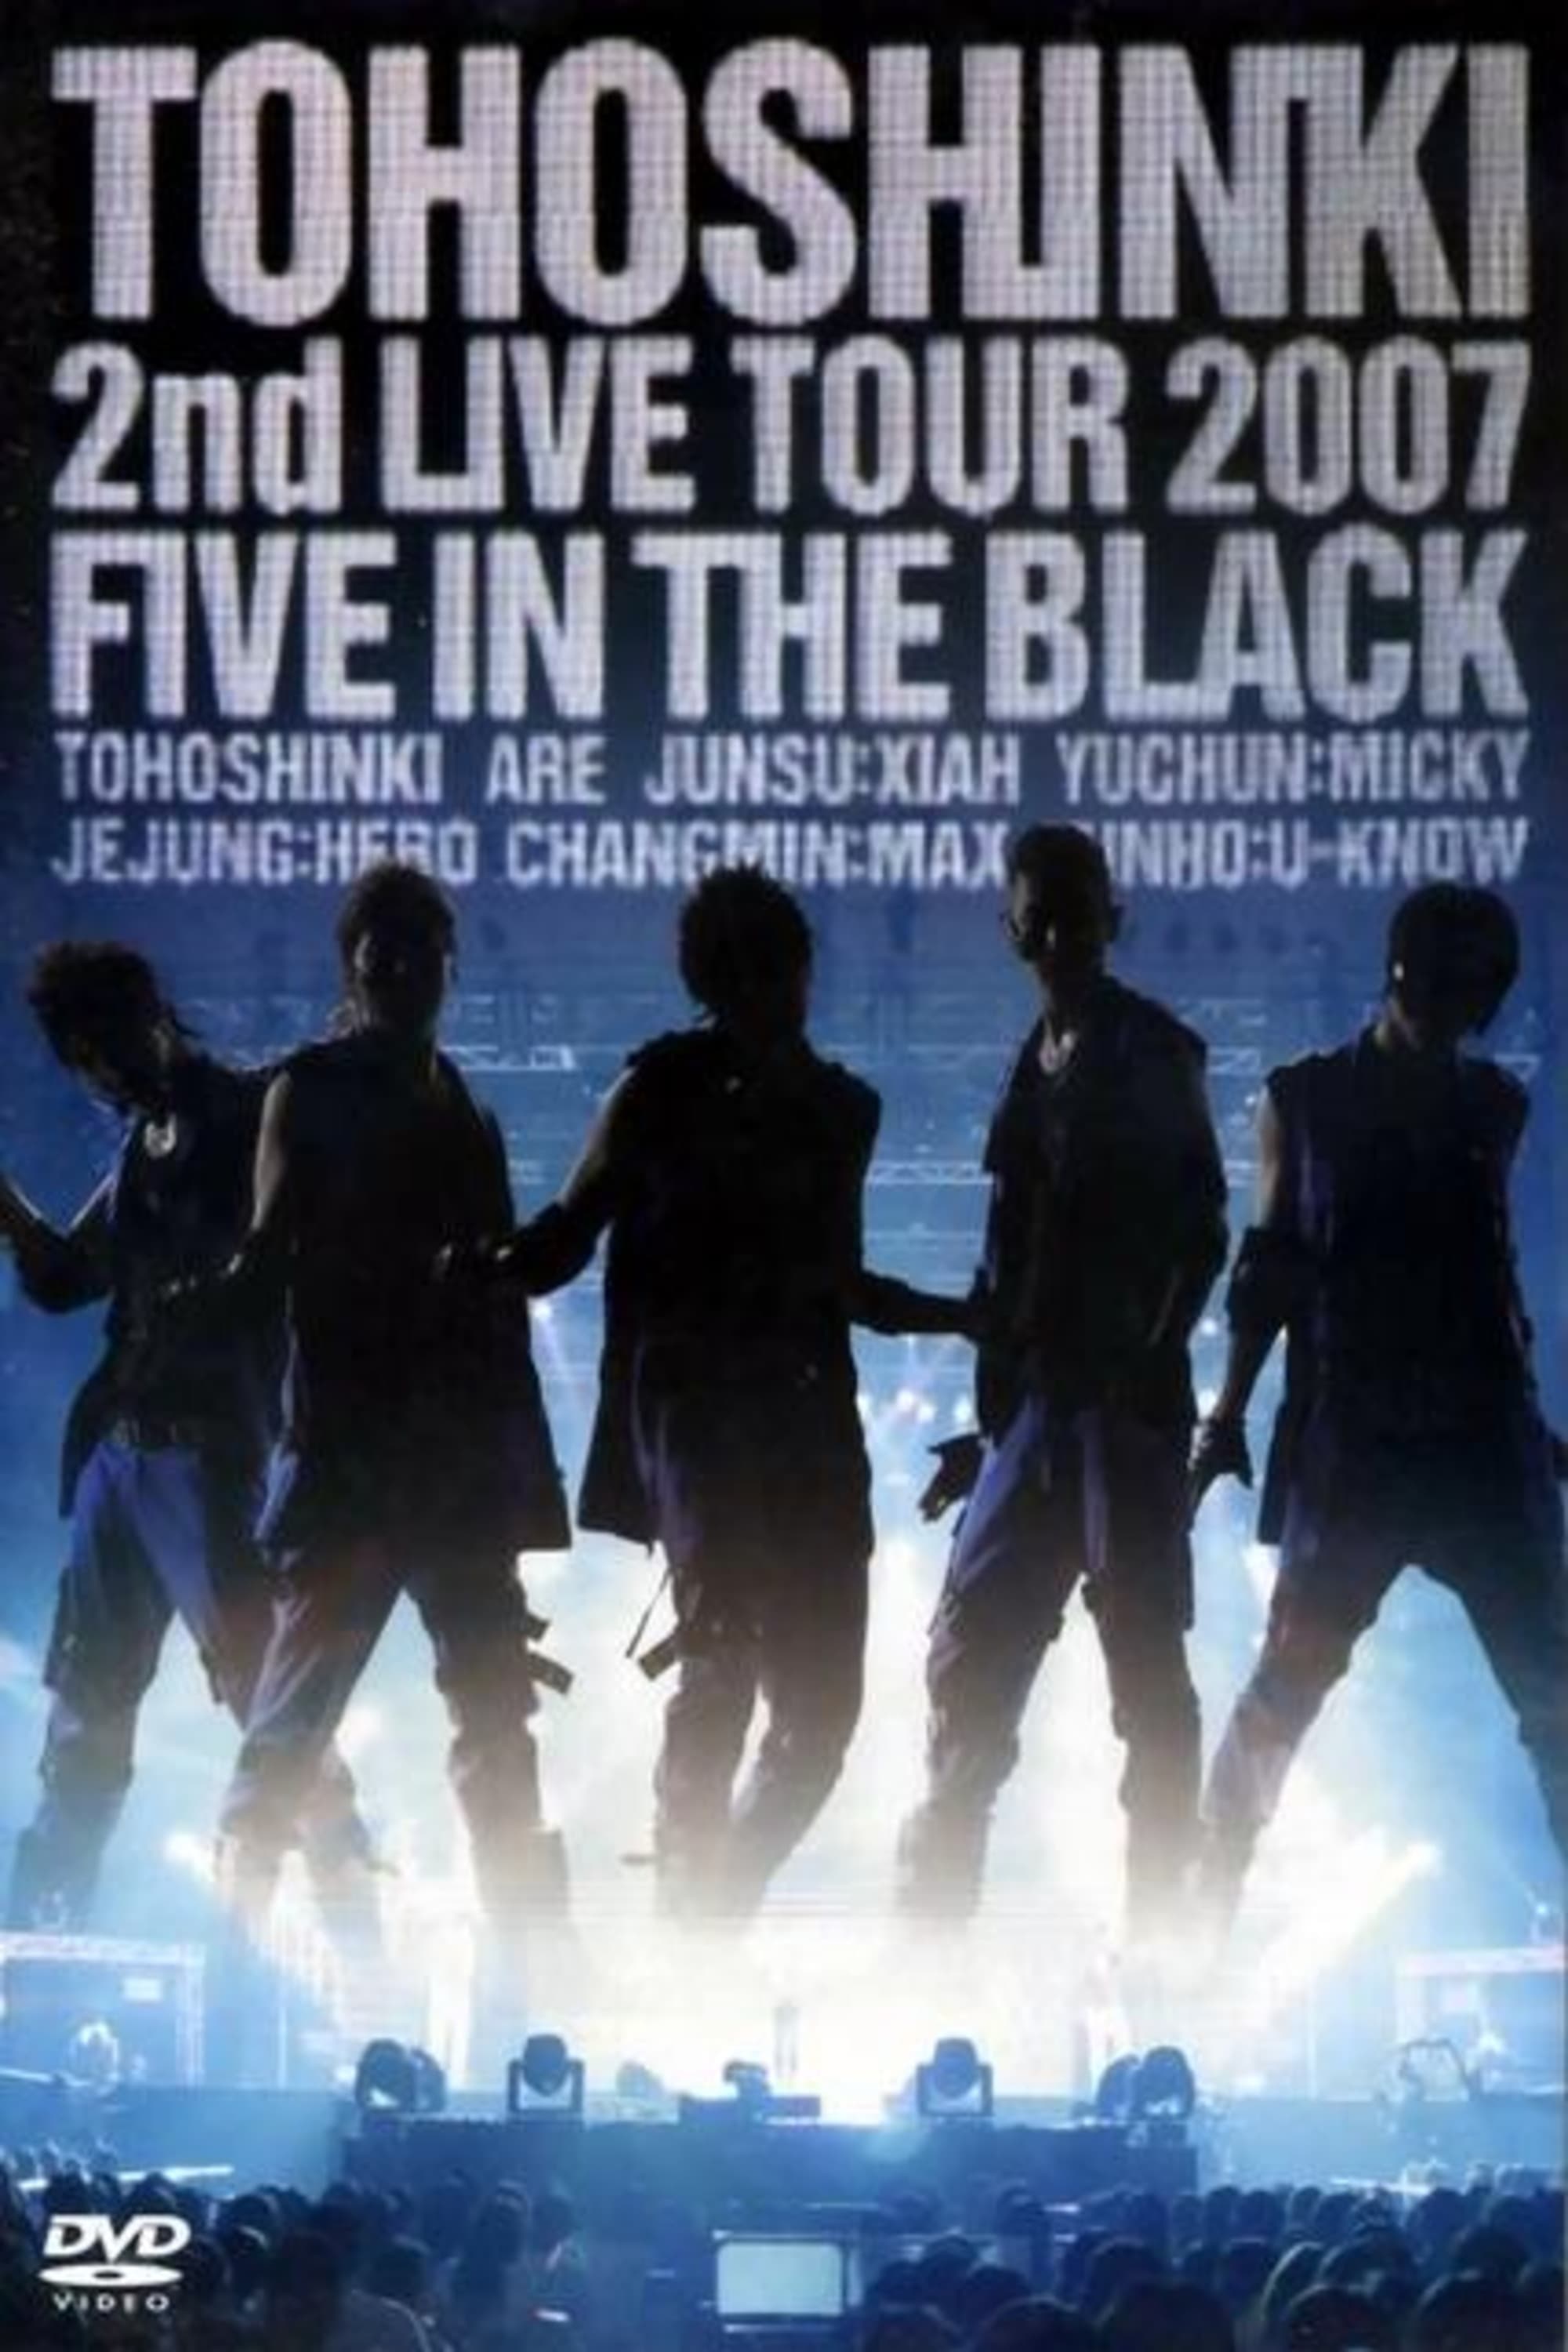 TOHOSHINKI 2nd LIVE TOUR 2007 FIVE IN THE BLACK